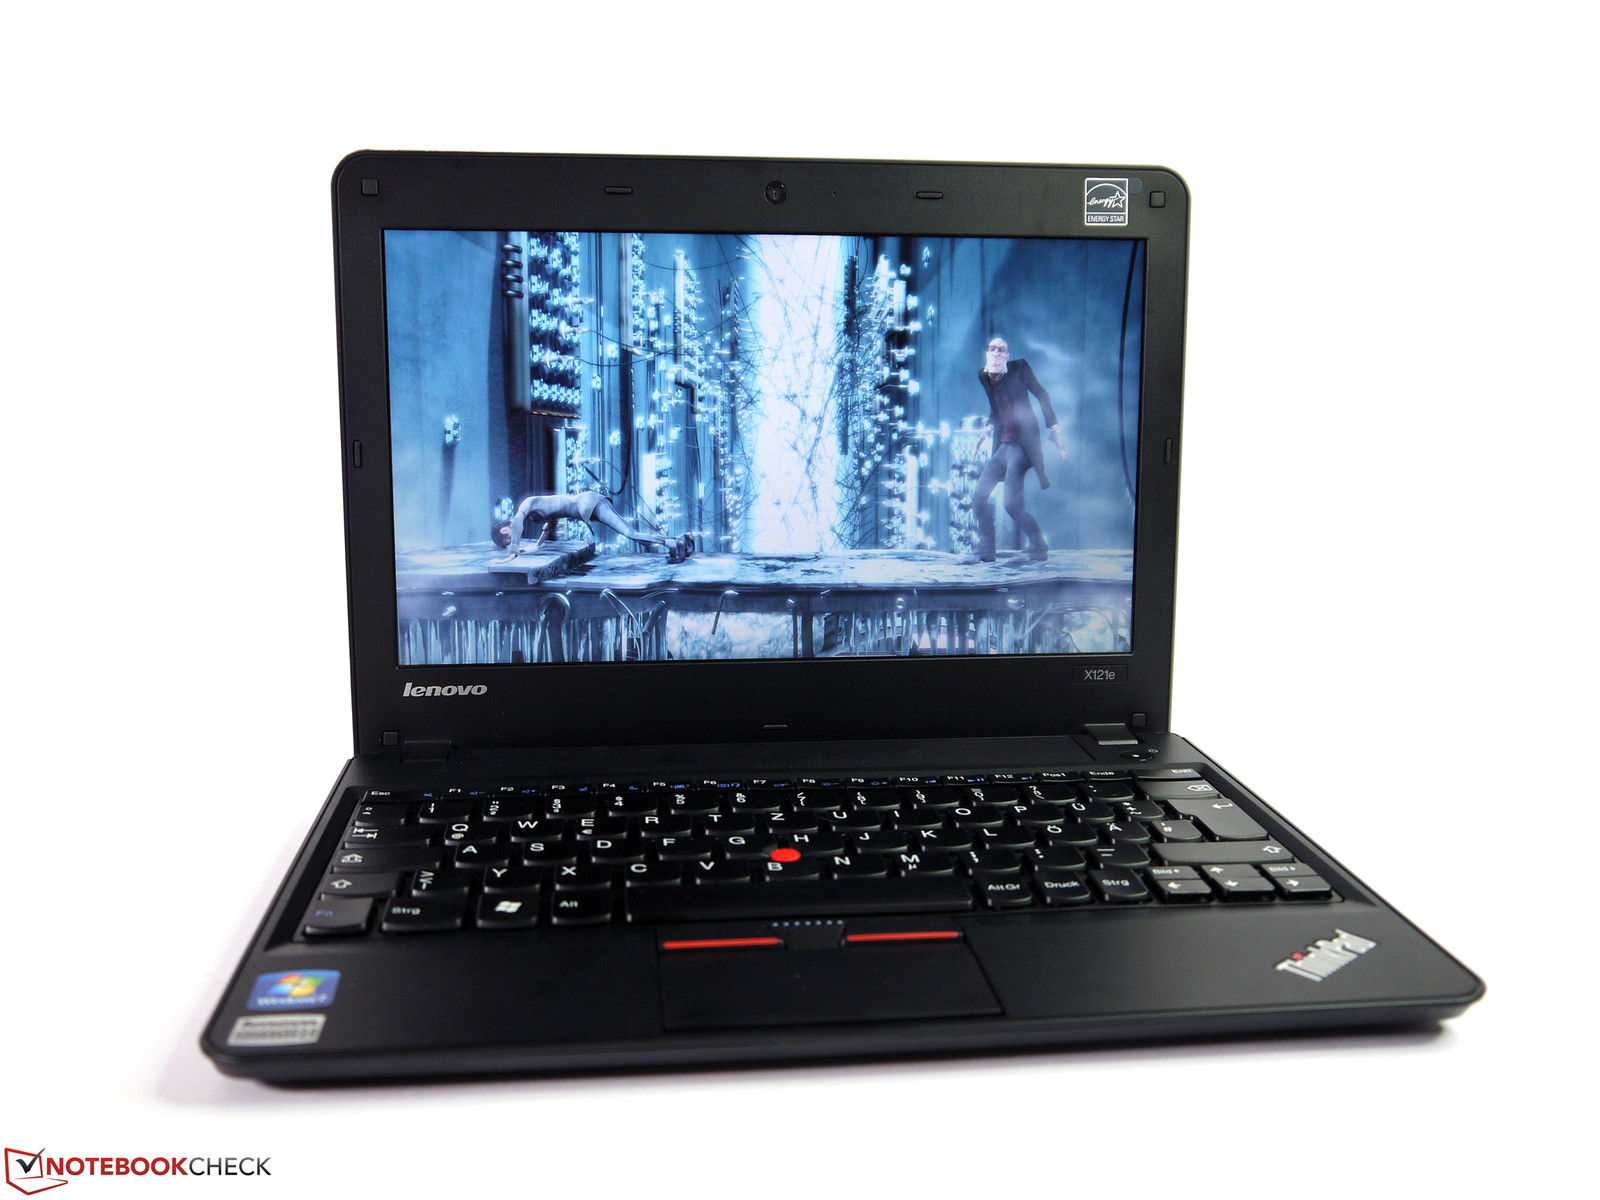 Review Update Lenovo ThinkPad X121e (AMD E-300) Notebook -  NotebookCheck.net Reviews